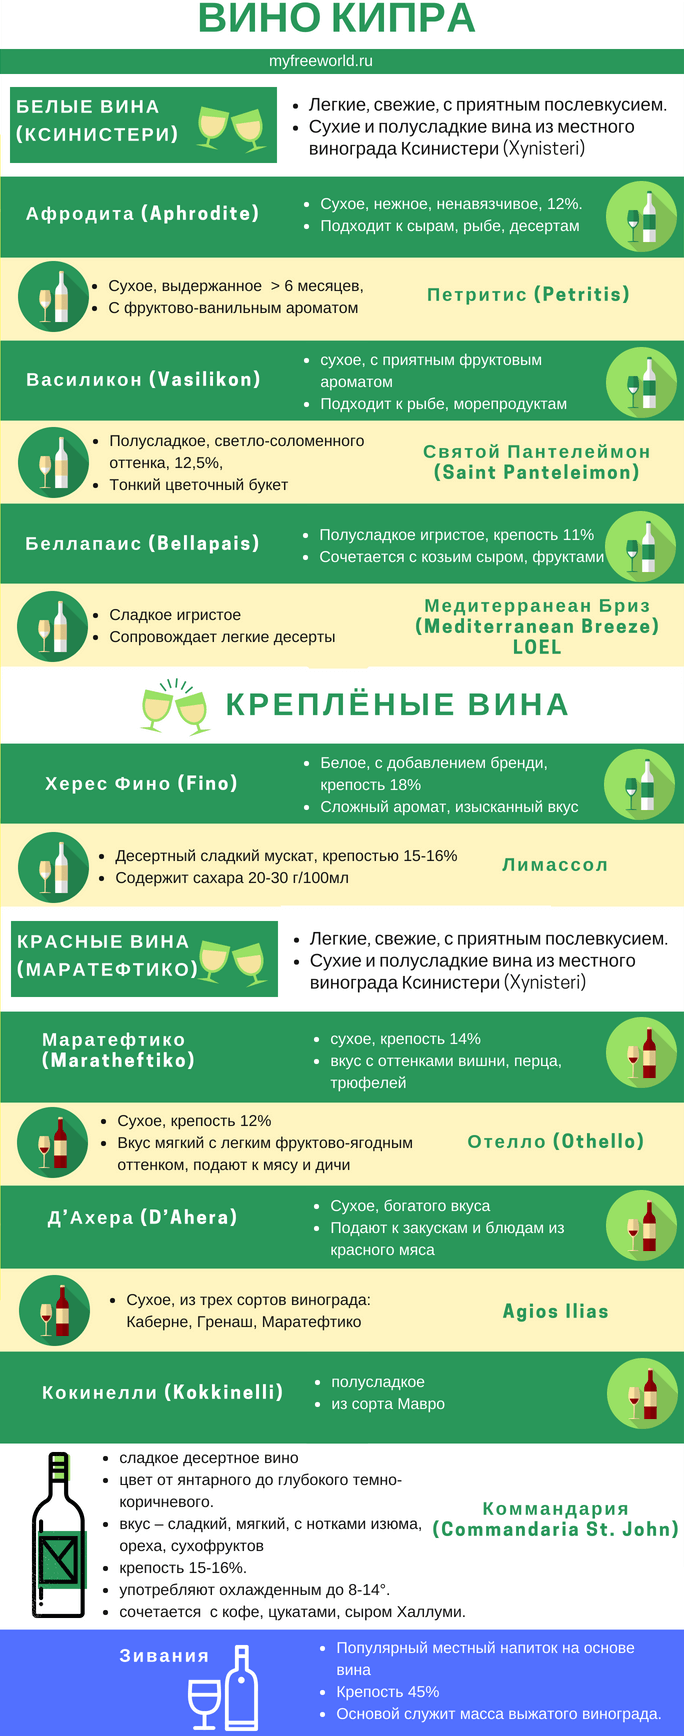 Инфографика вина Кипра